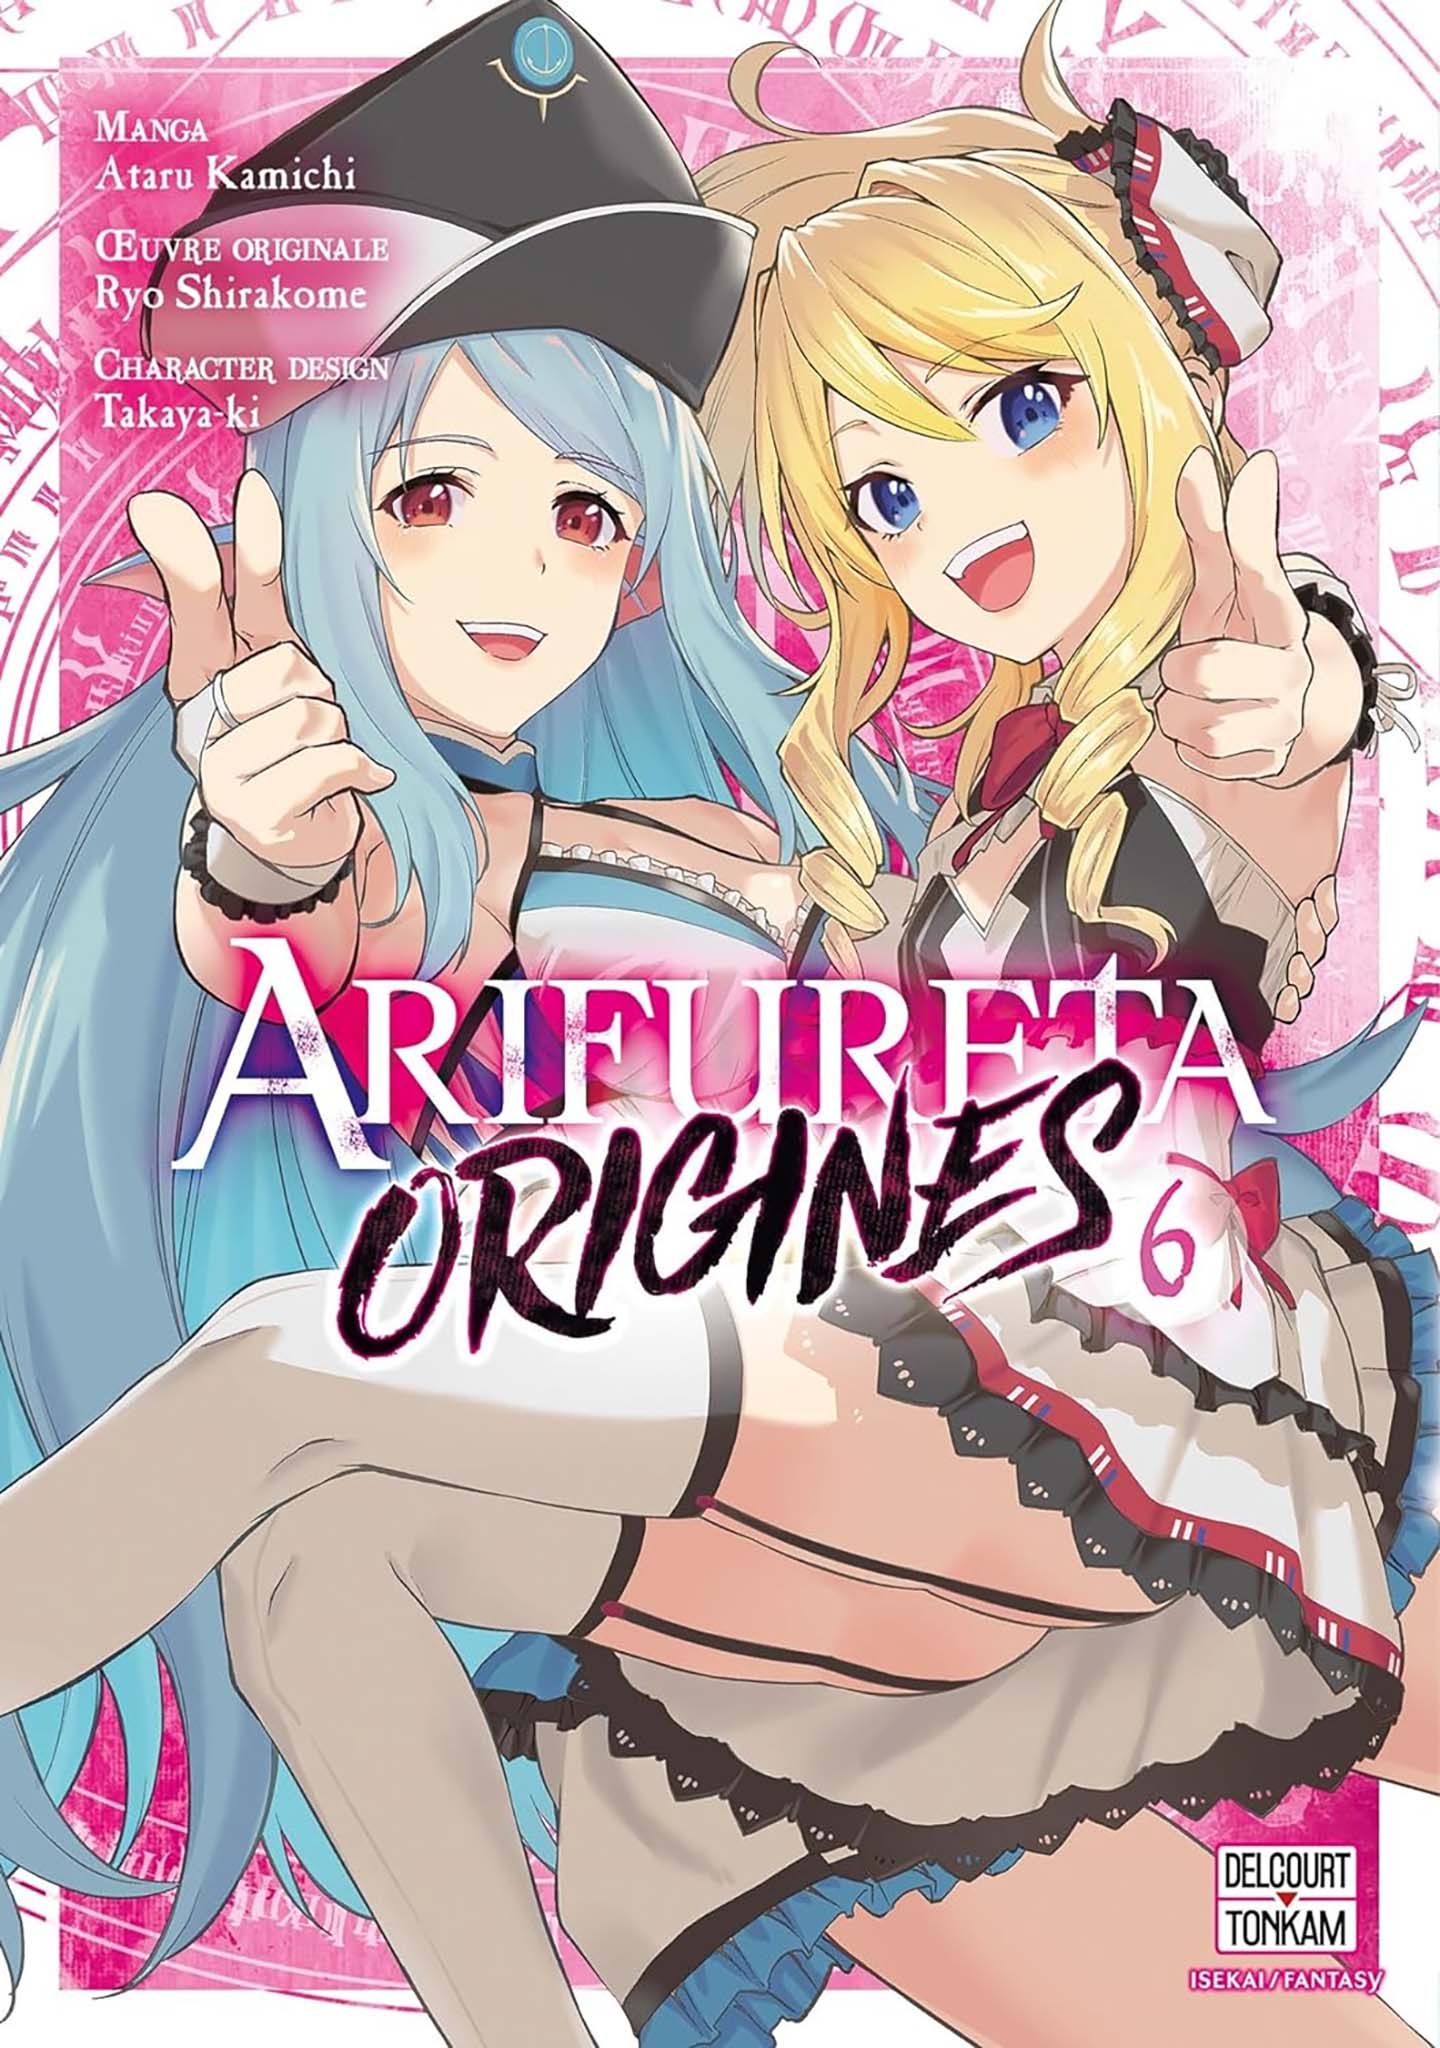 Tome 6 du manga Arifureta : Origines.